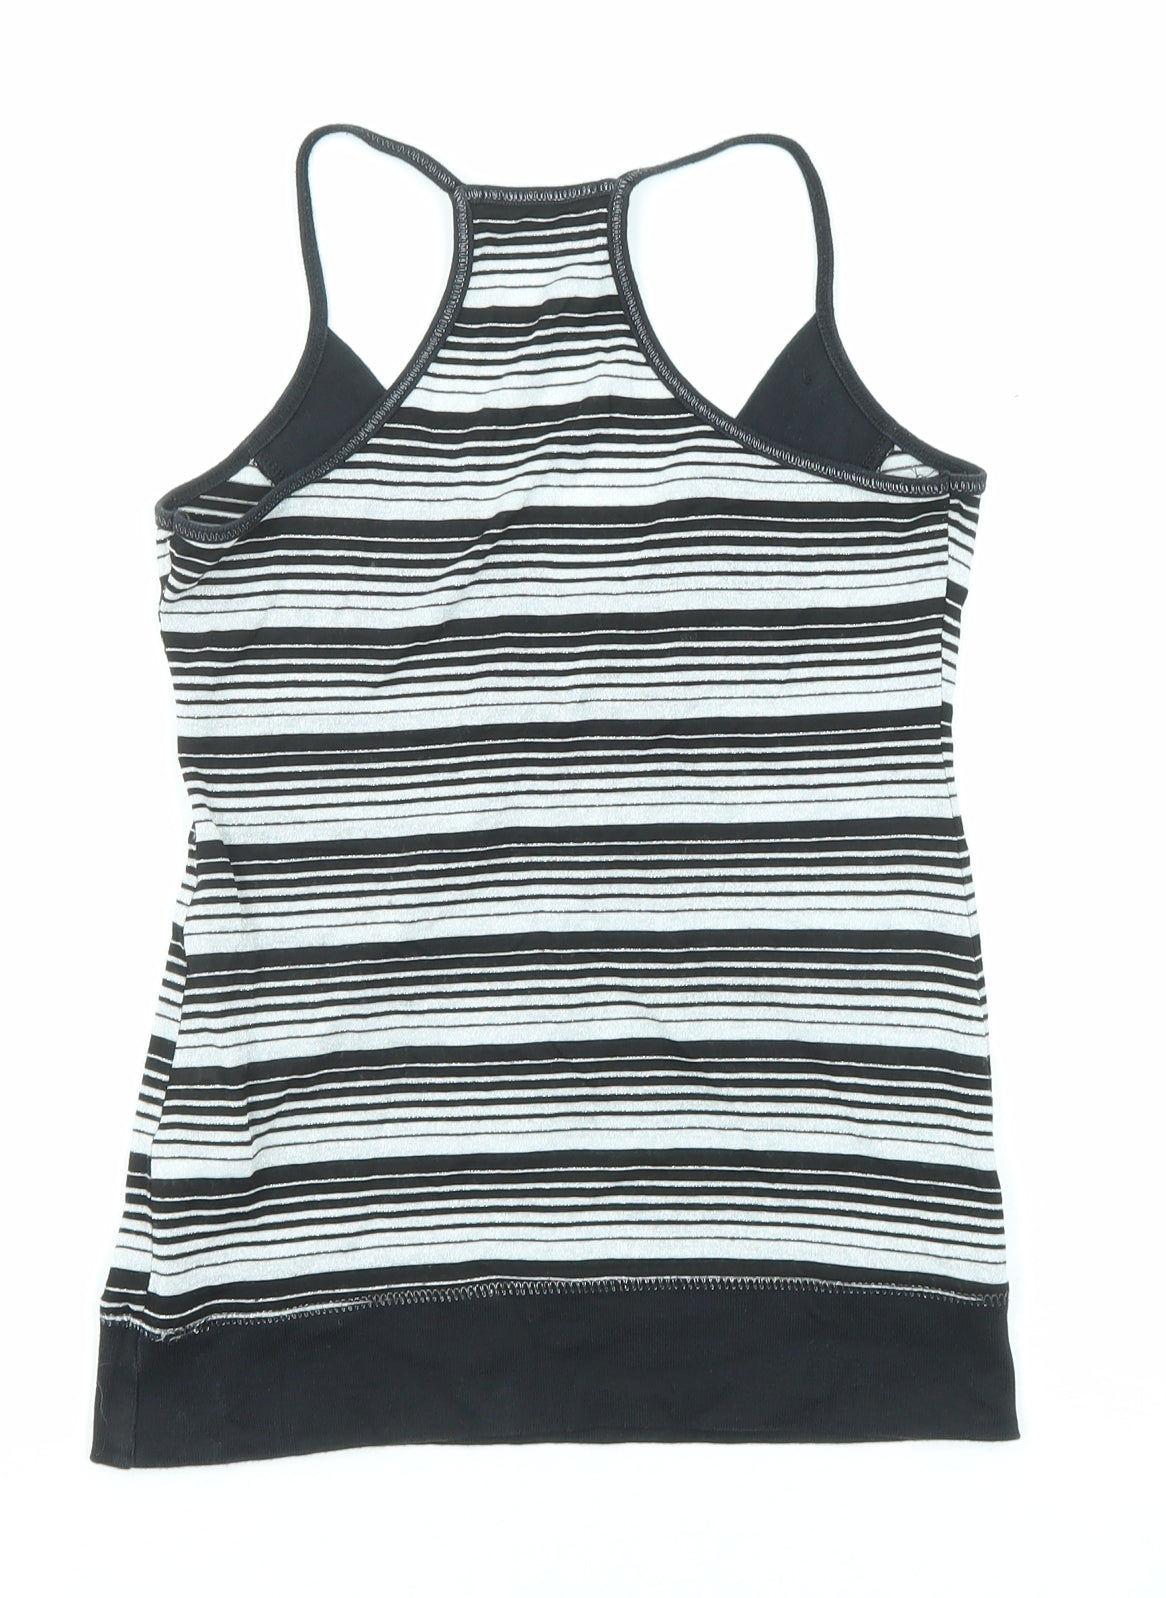 Jane Norman Womens Black Striped Viscose Camisole Tank Size 10 V-Neck